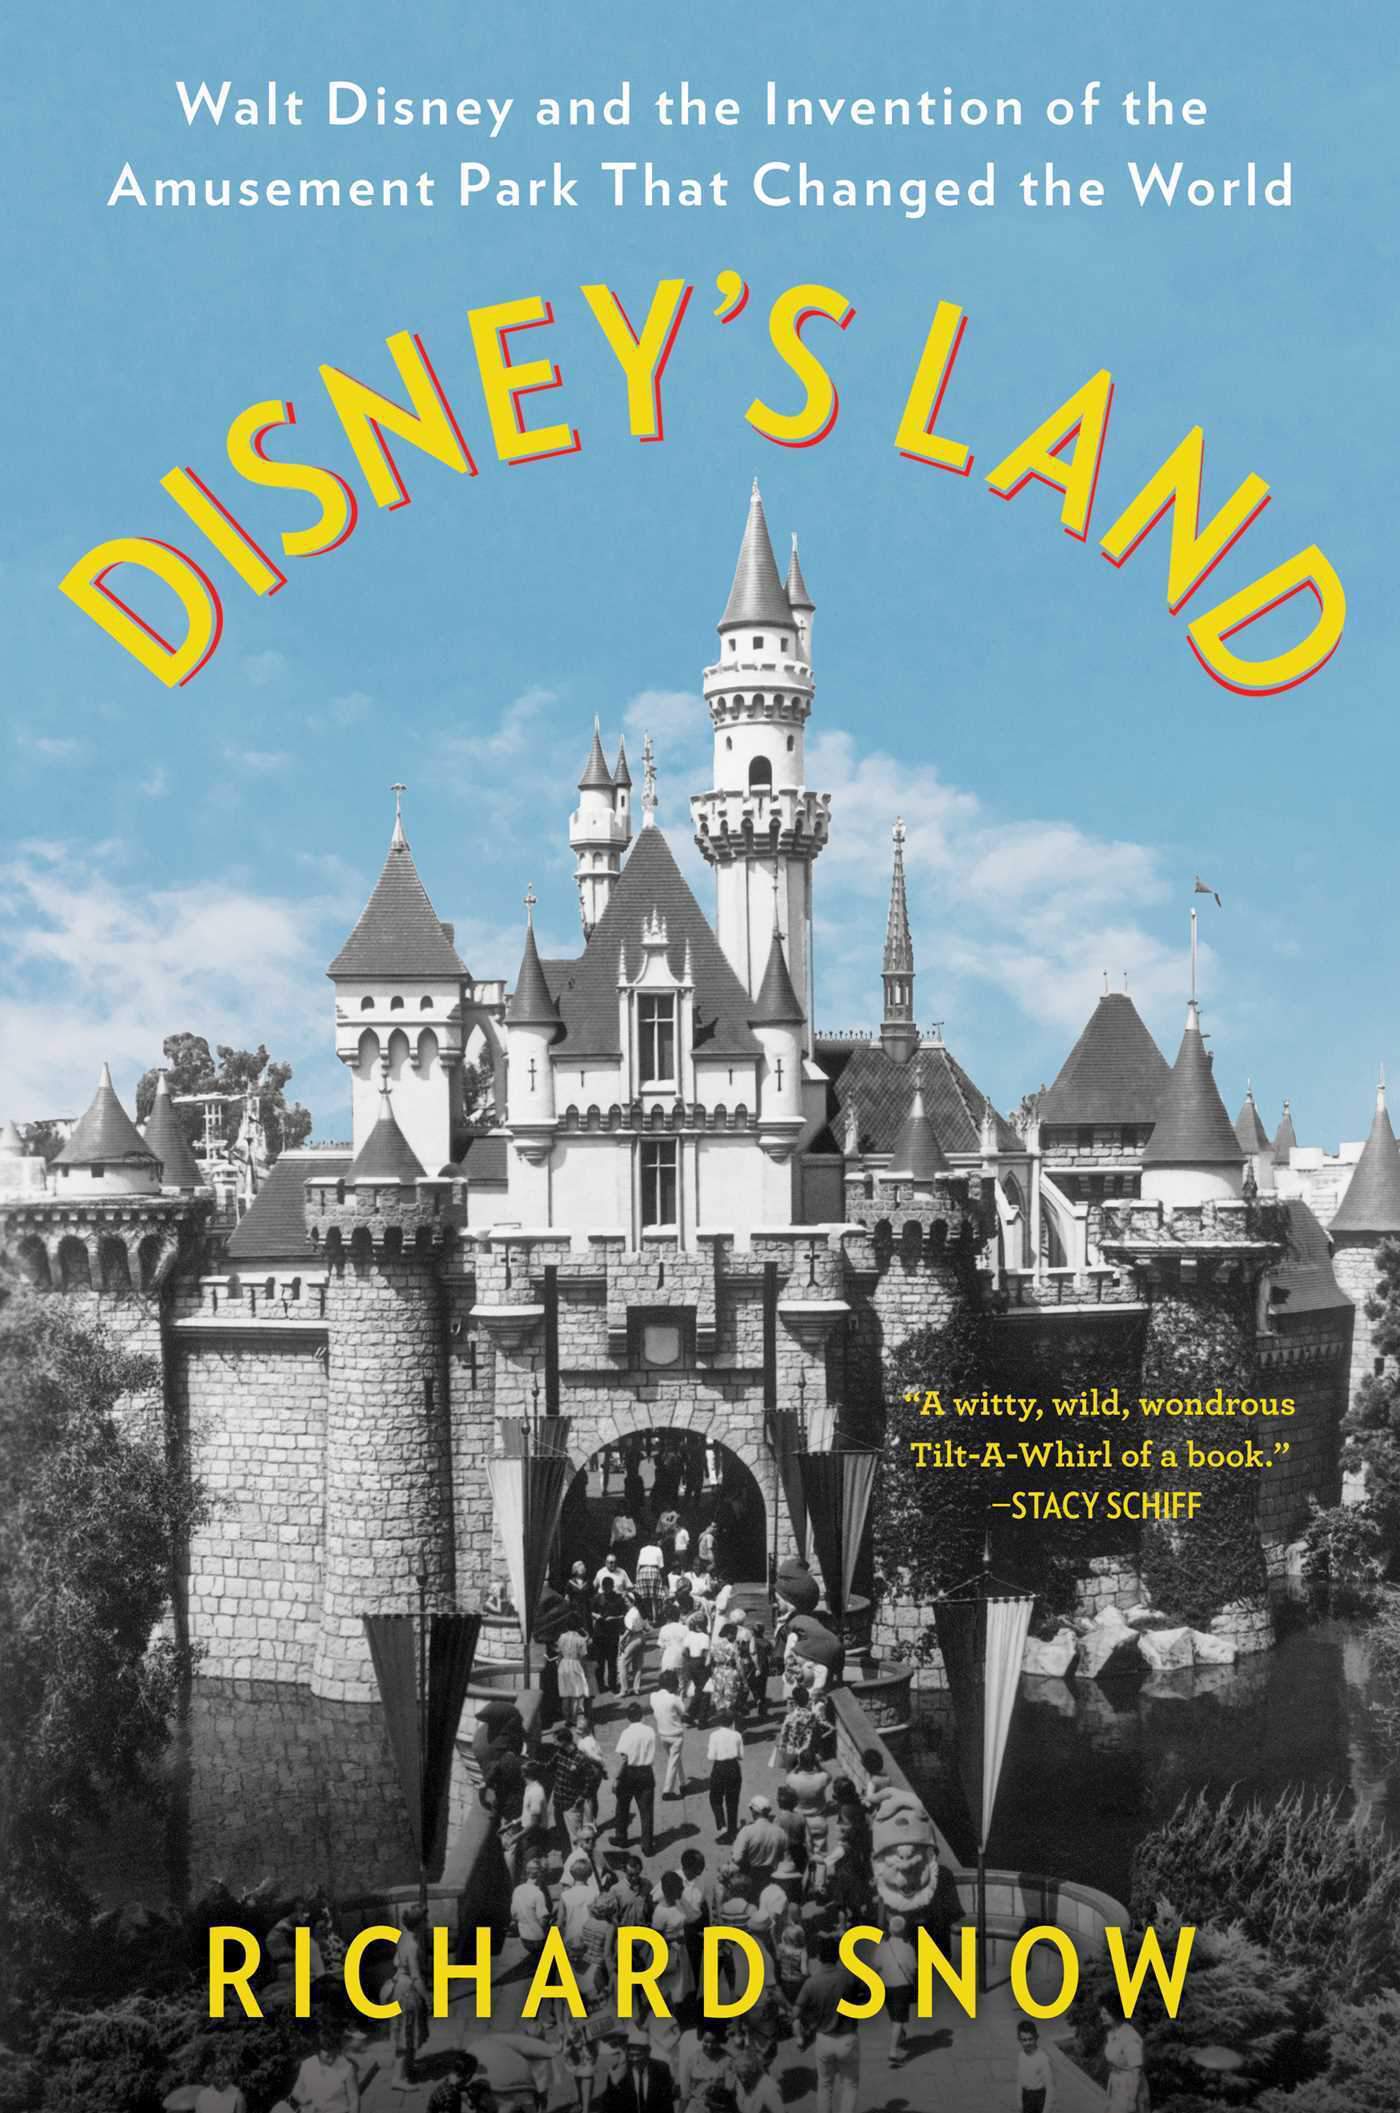 Book Review: Disney fans will enjoy Snow's 'Disney's Land'